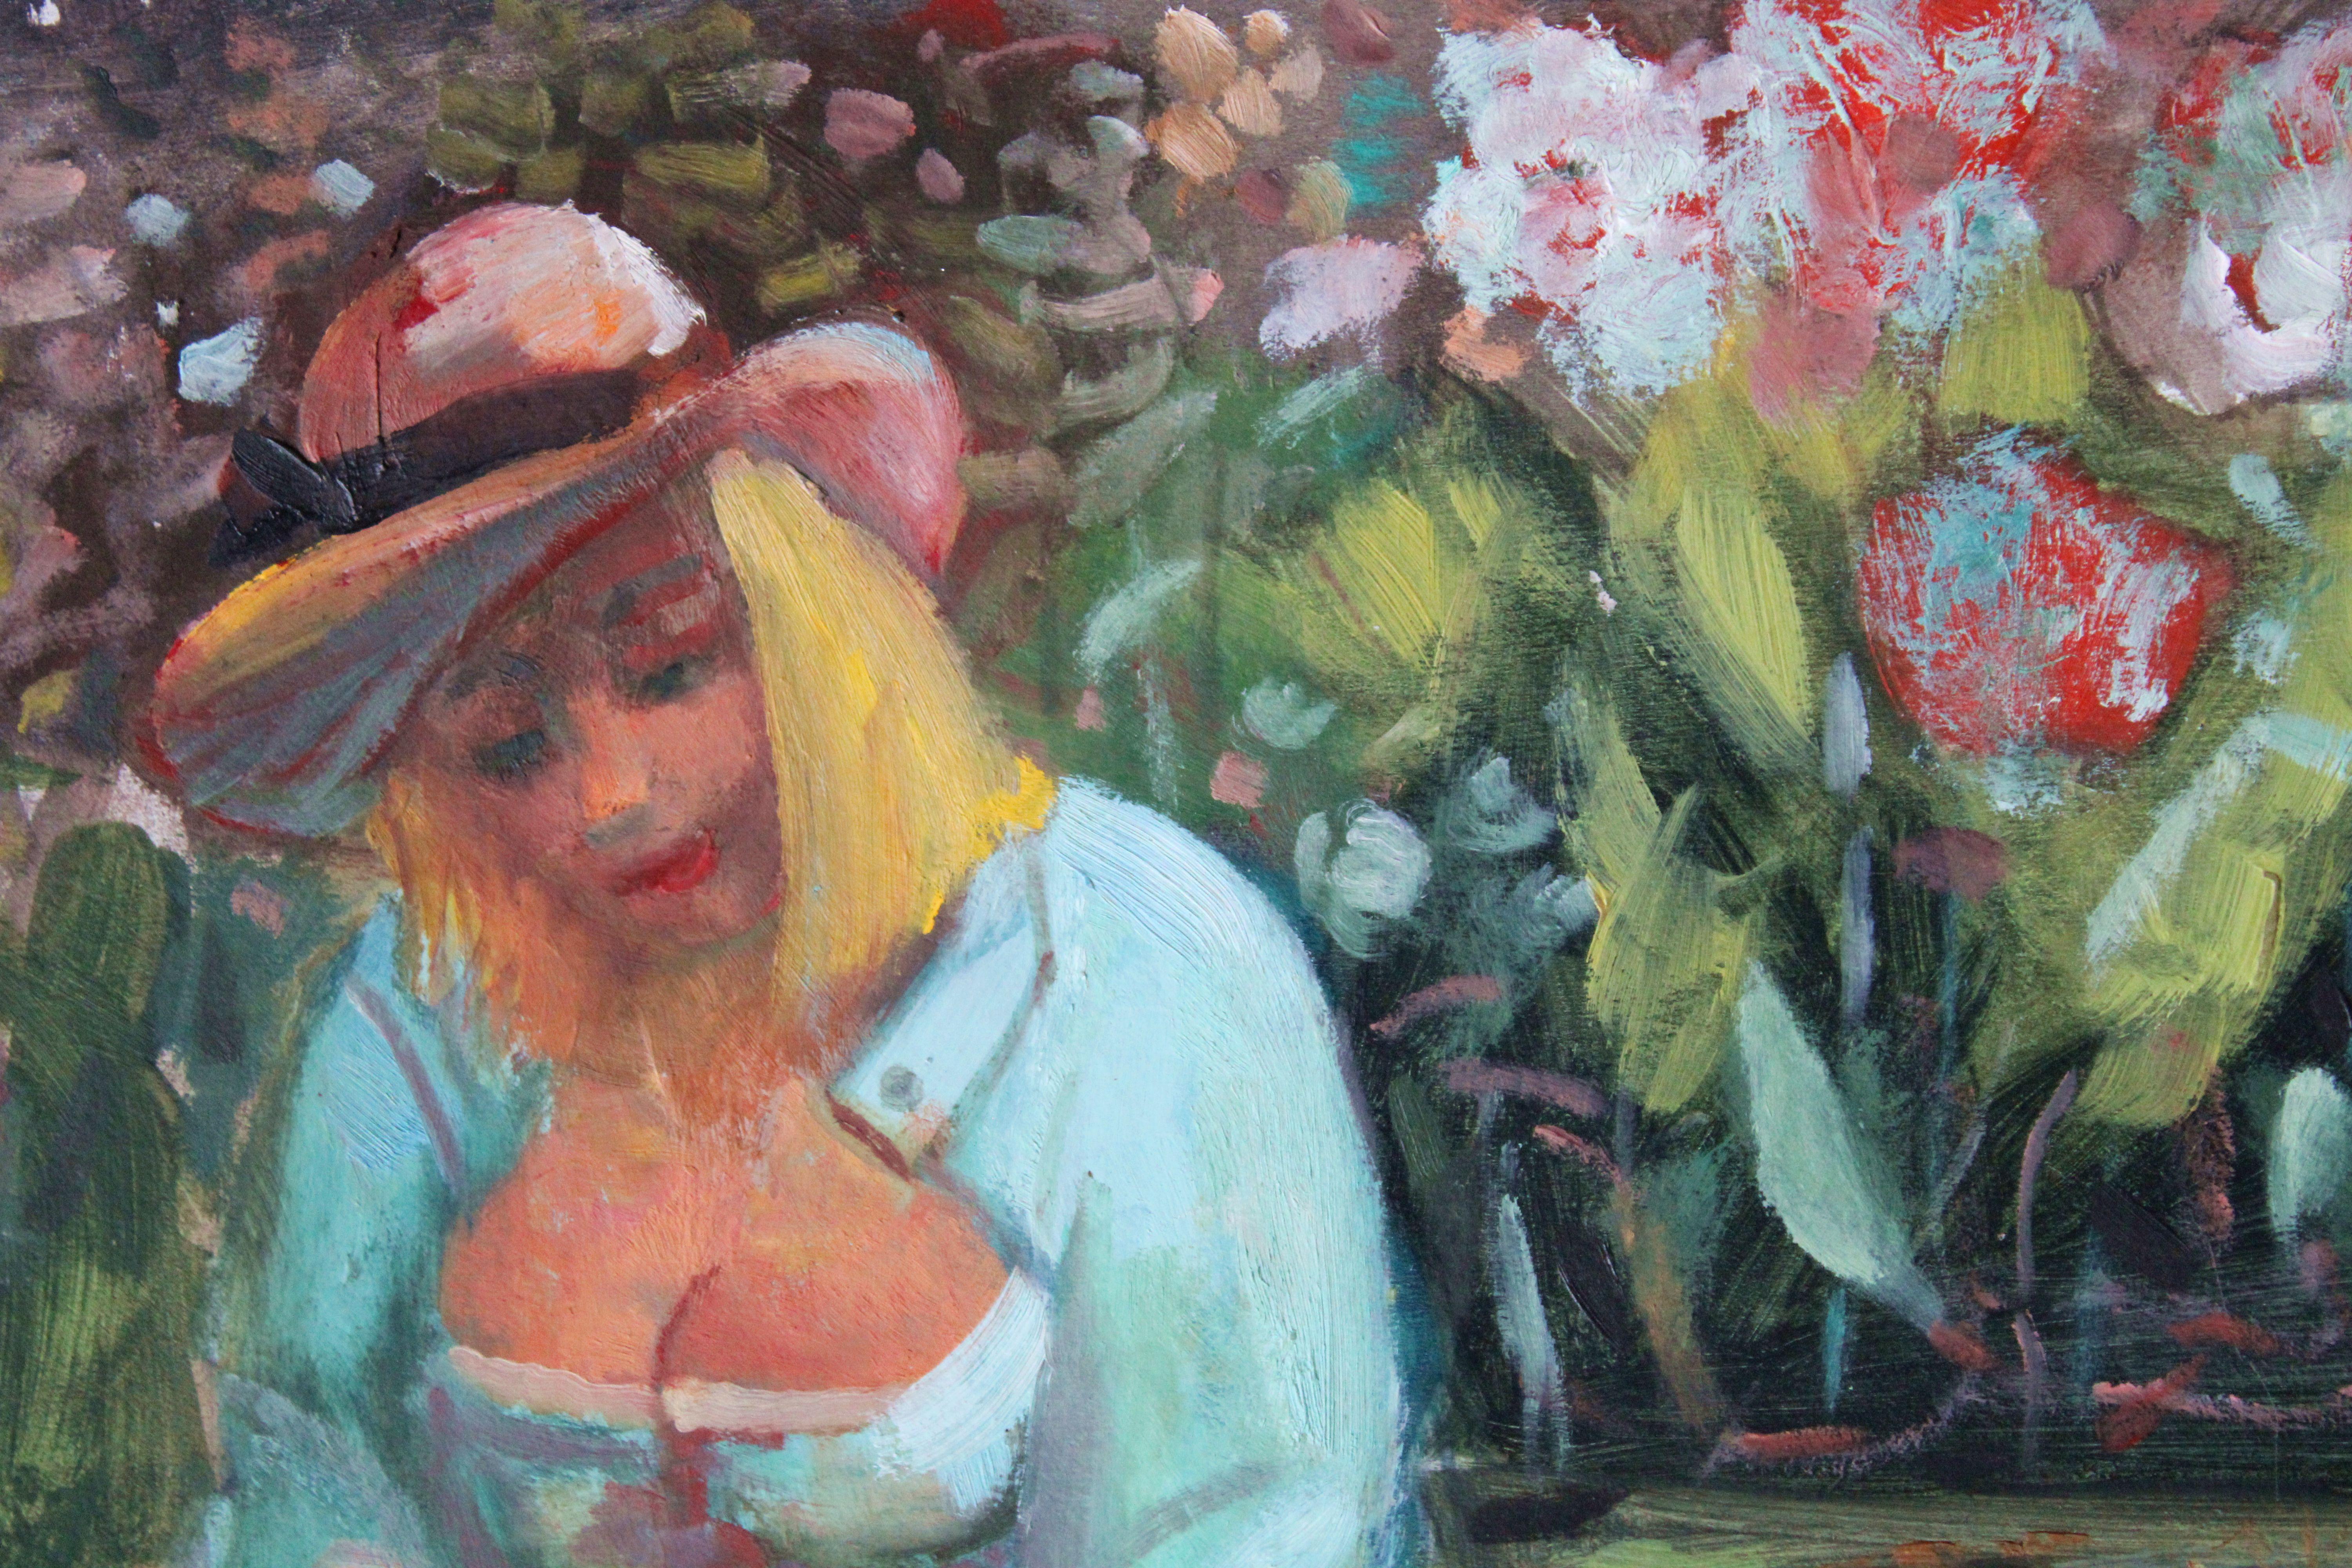 Solvita in the garden  1990, cardboard, oil, 35x50 cm. - Painting by Uldis Krauze